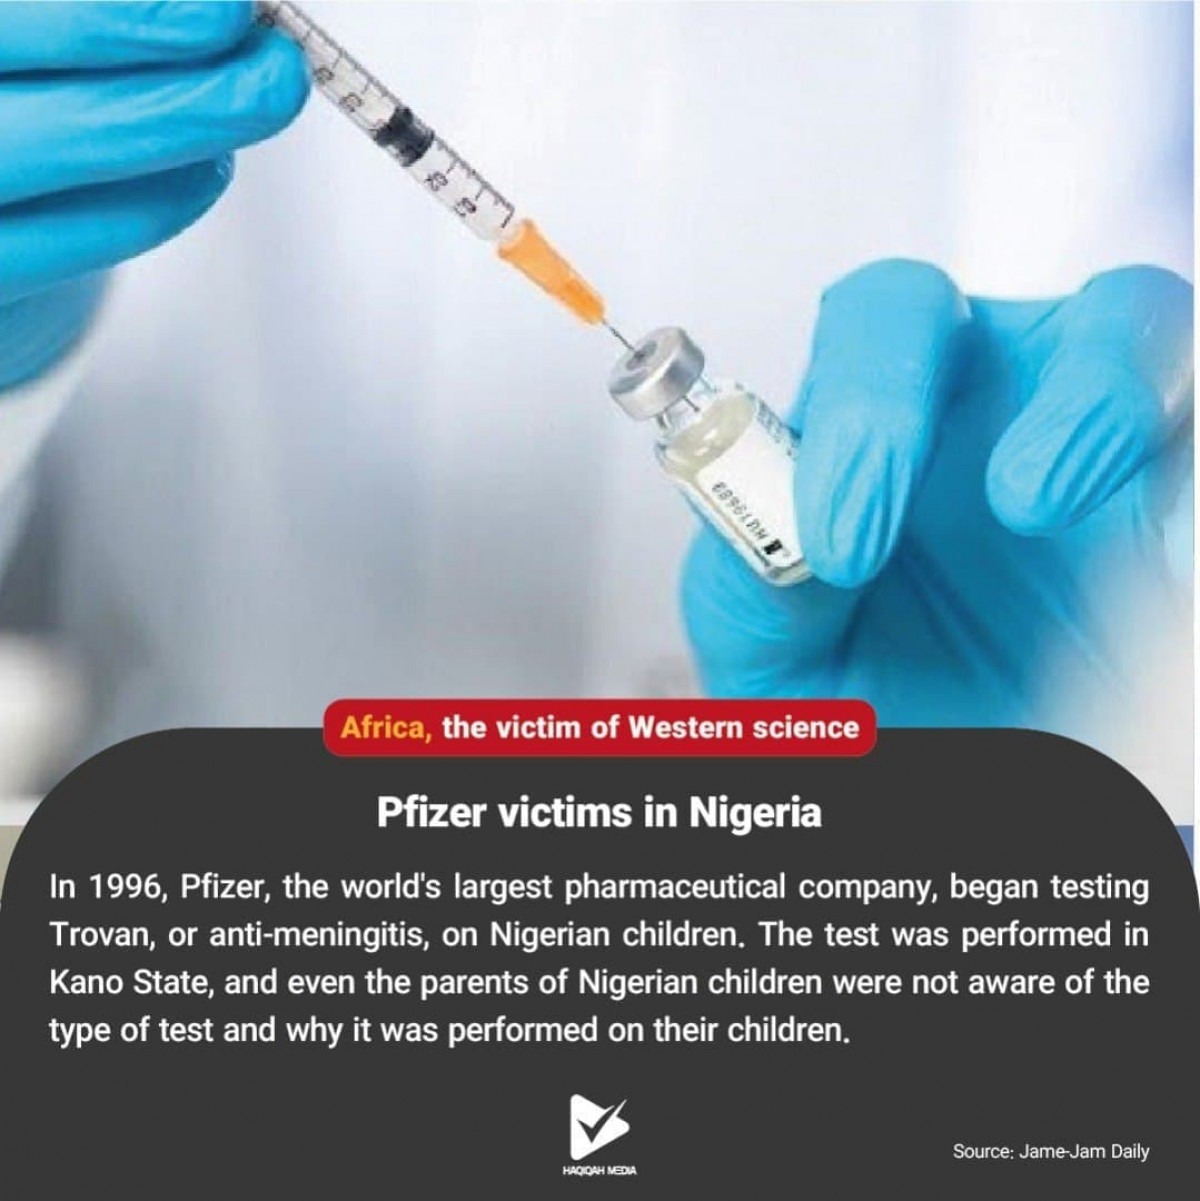 Pfizer victims in Nigeria